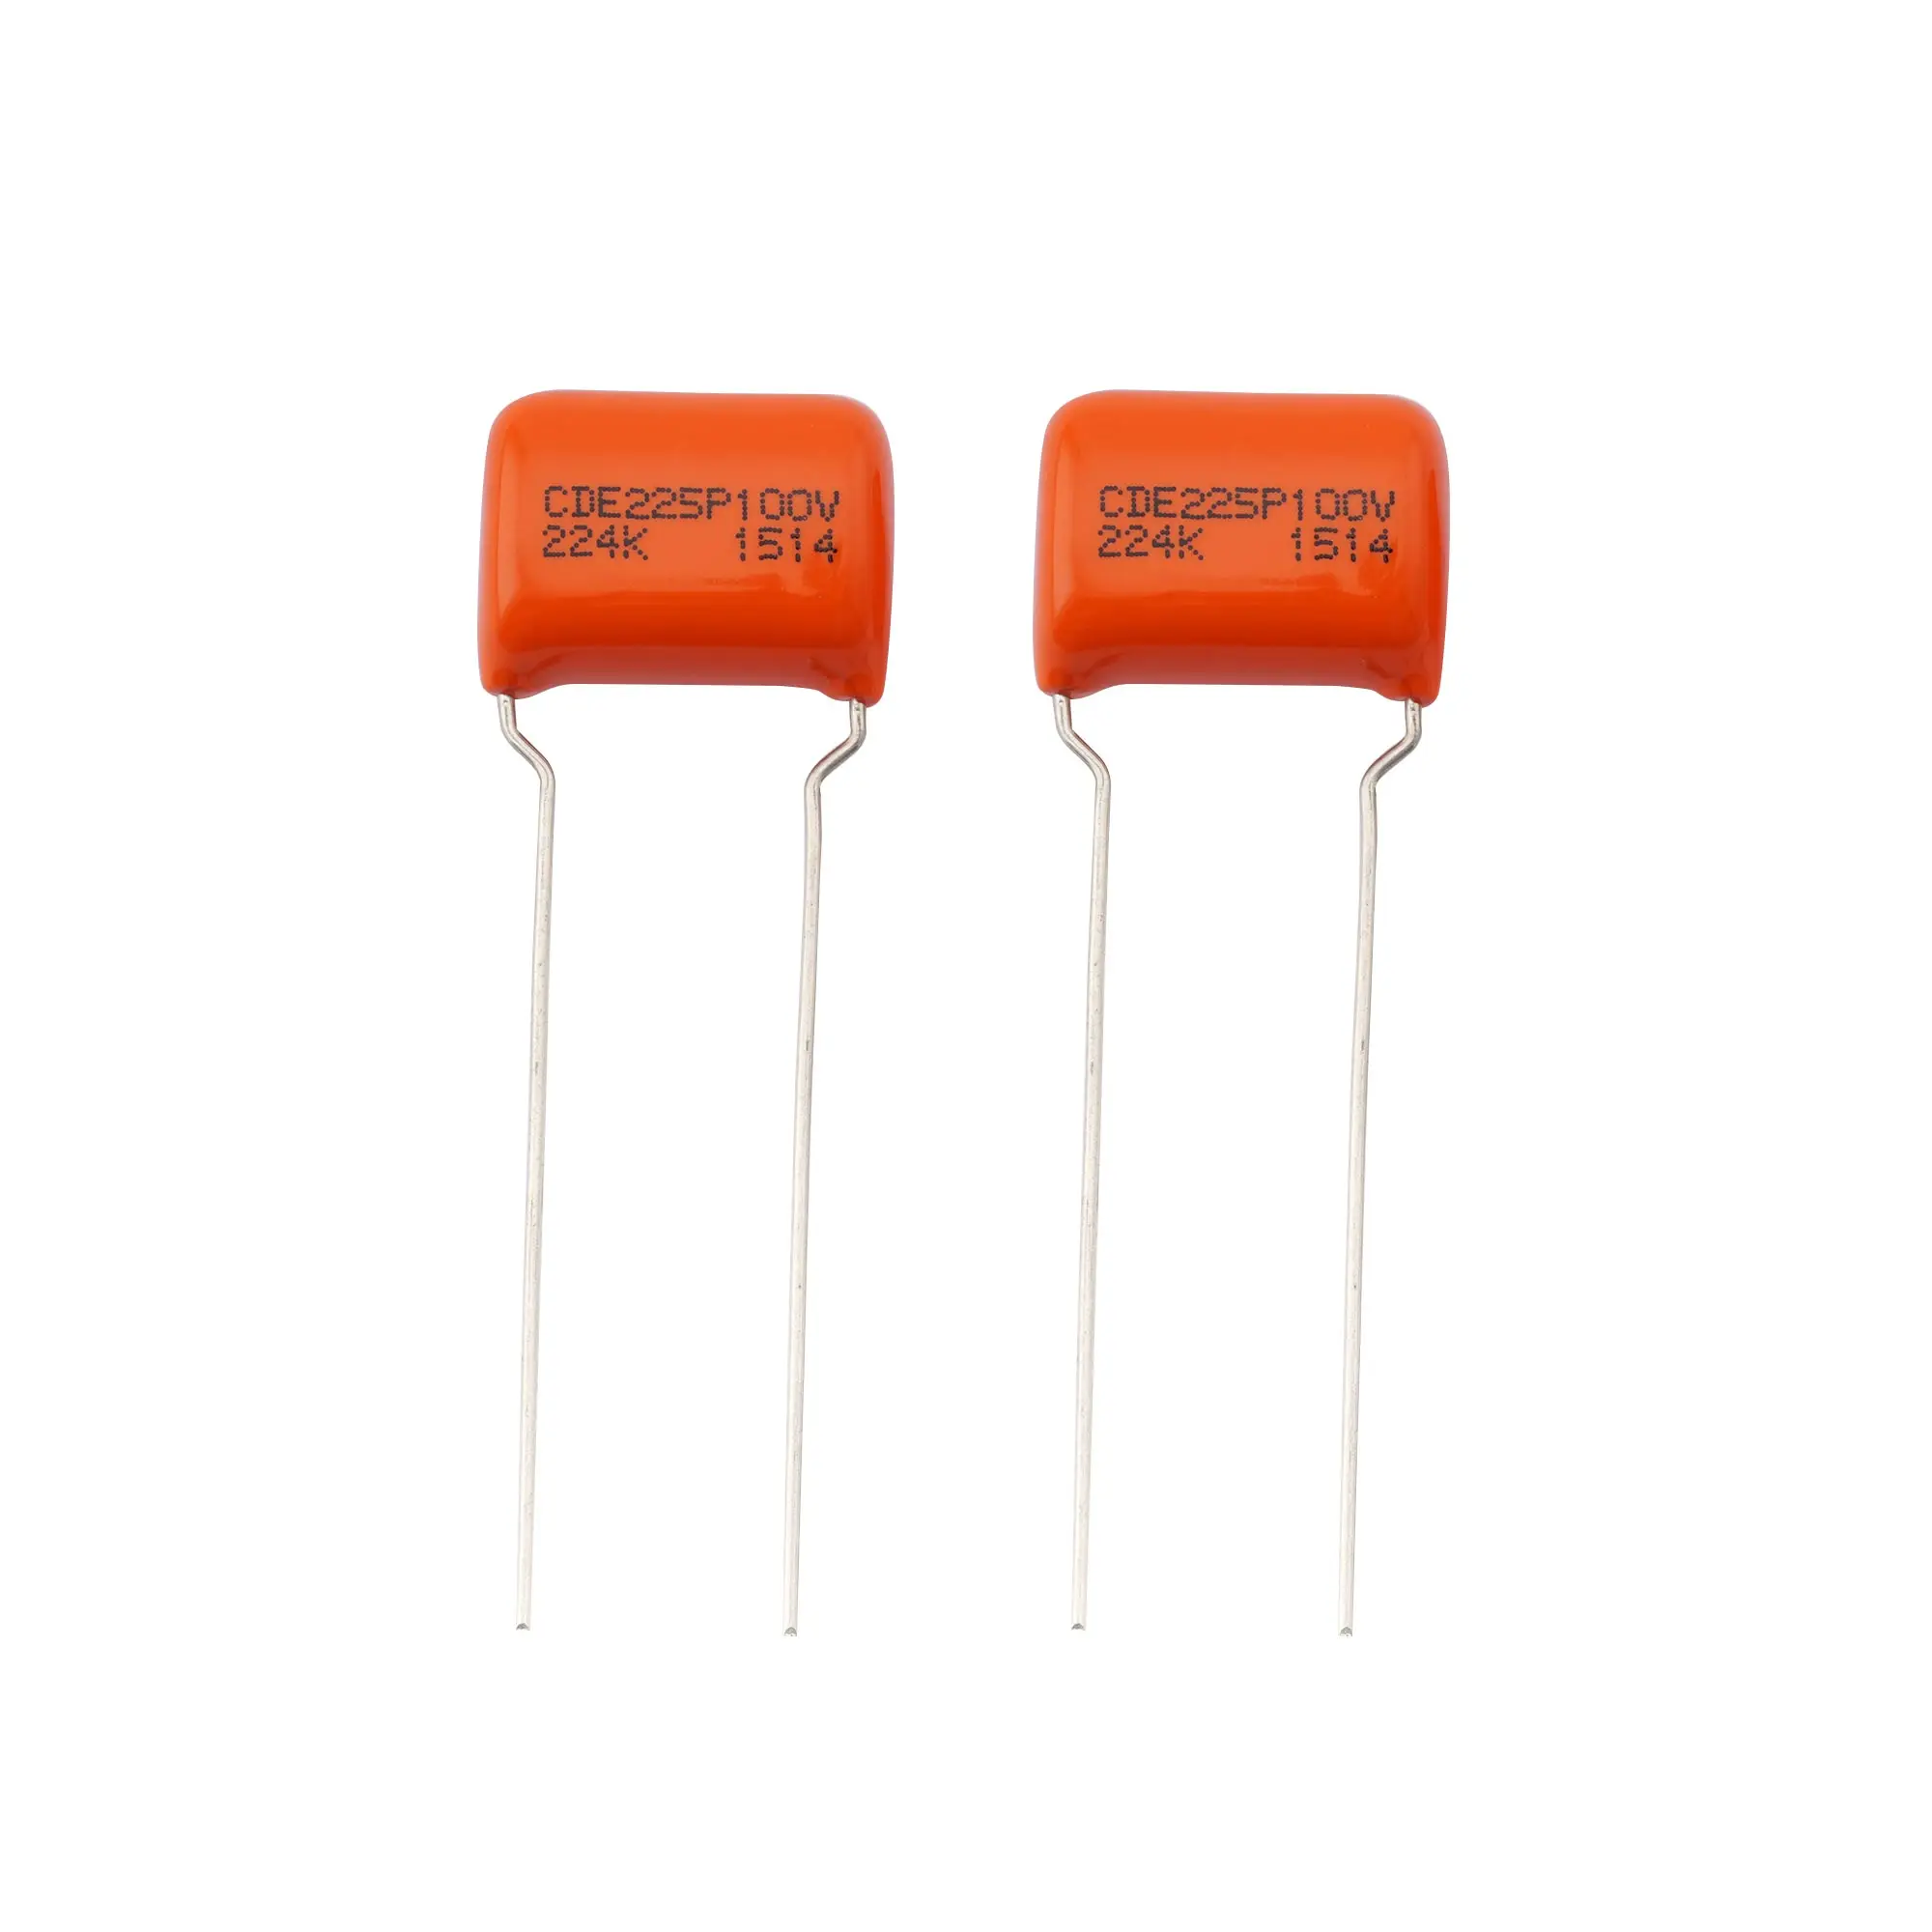 Set of 2 CDE Sprague Orange Drop Capacitors Tone Caps Polyester Film .22uF 225P 224K 100V for Guitar or Bass 